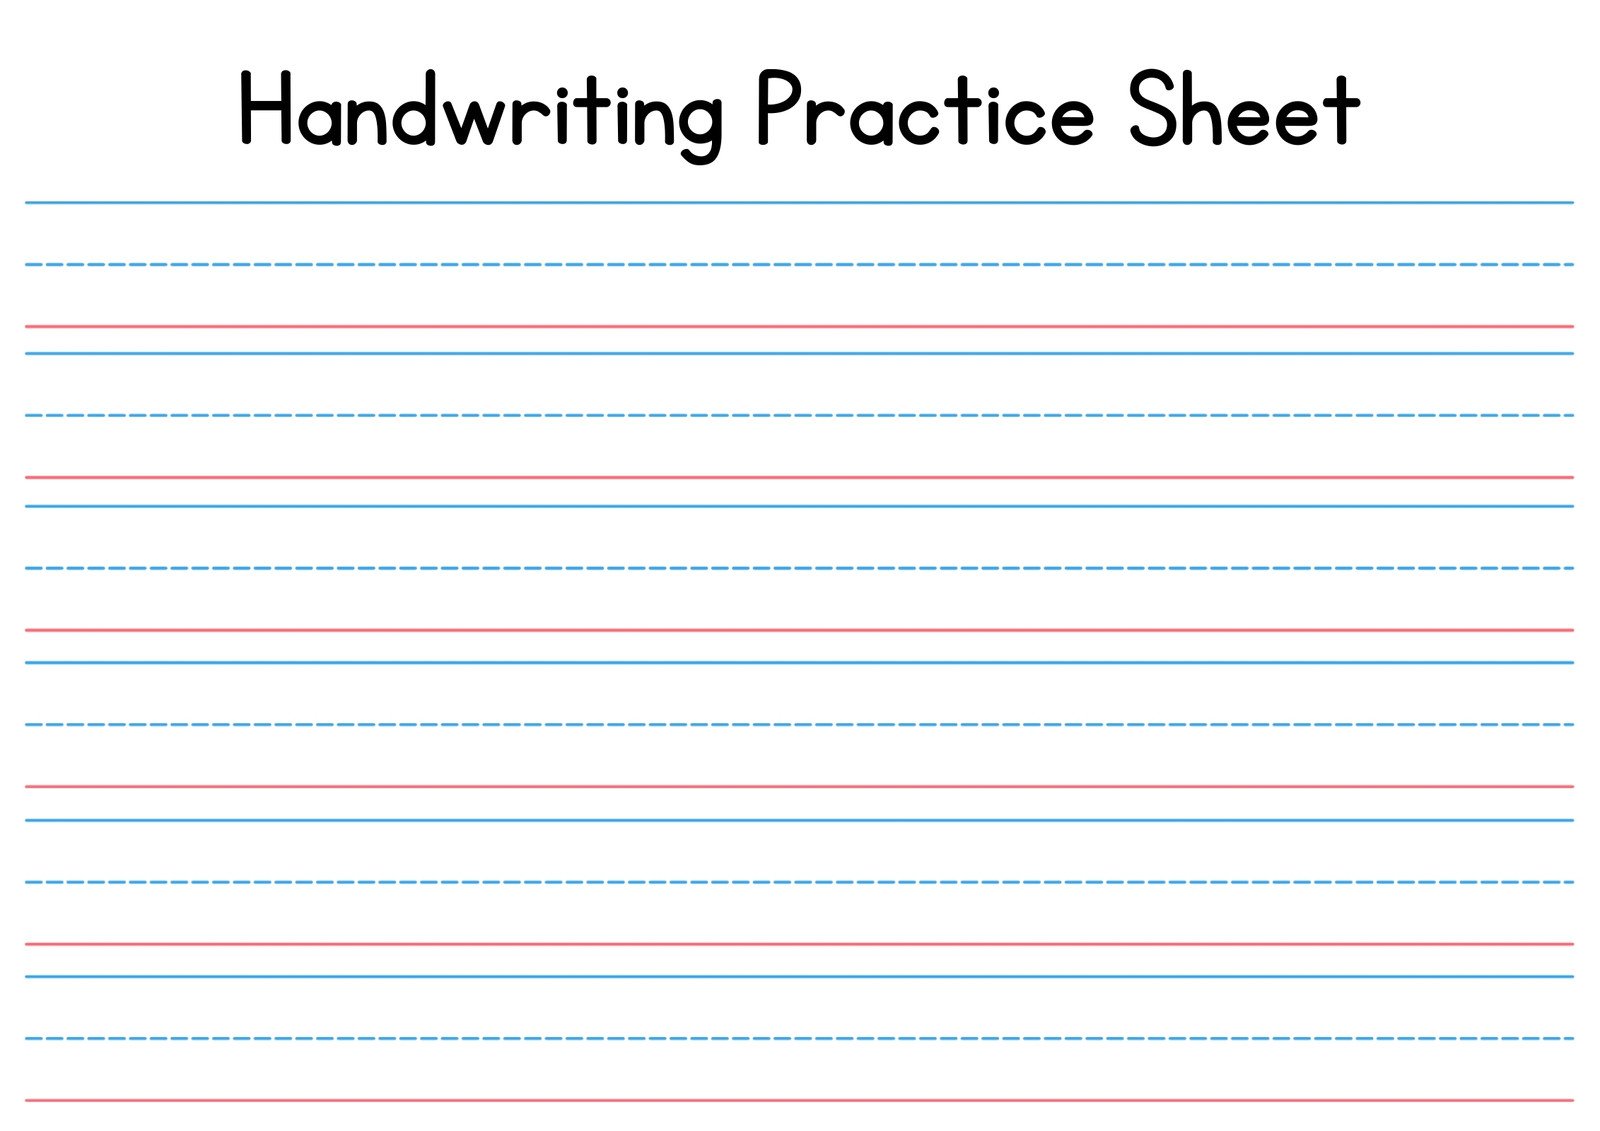 img./free-vector/handwriting-practice-k